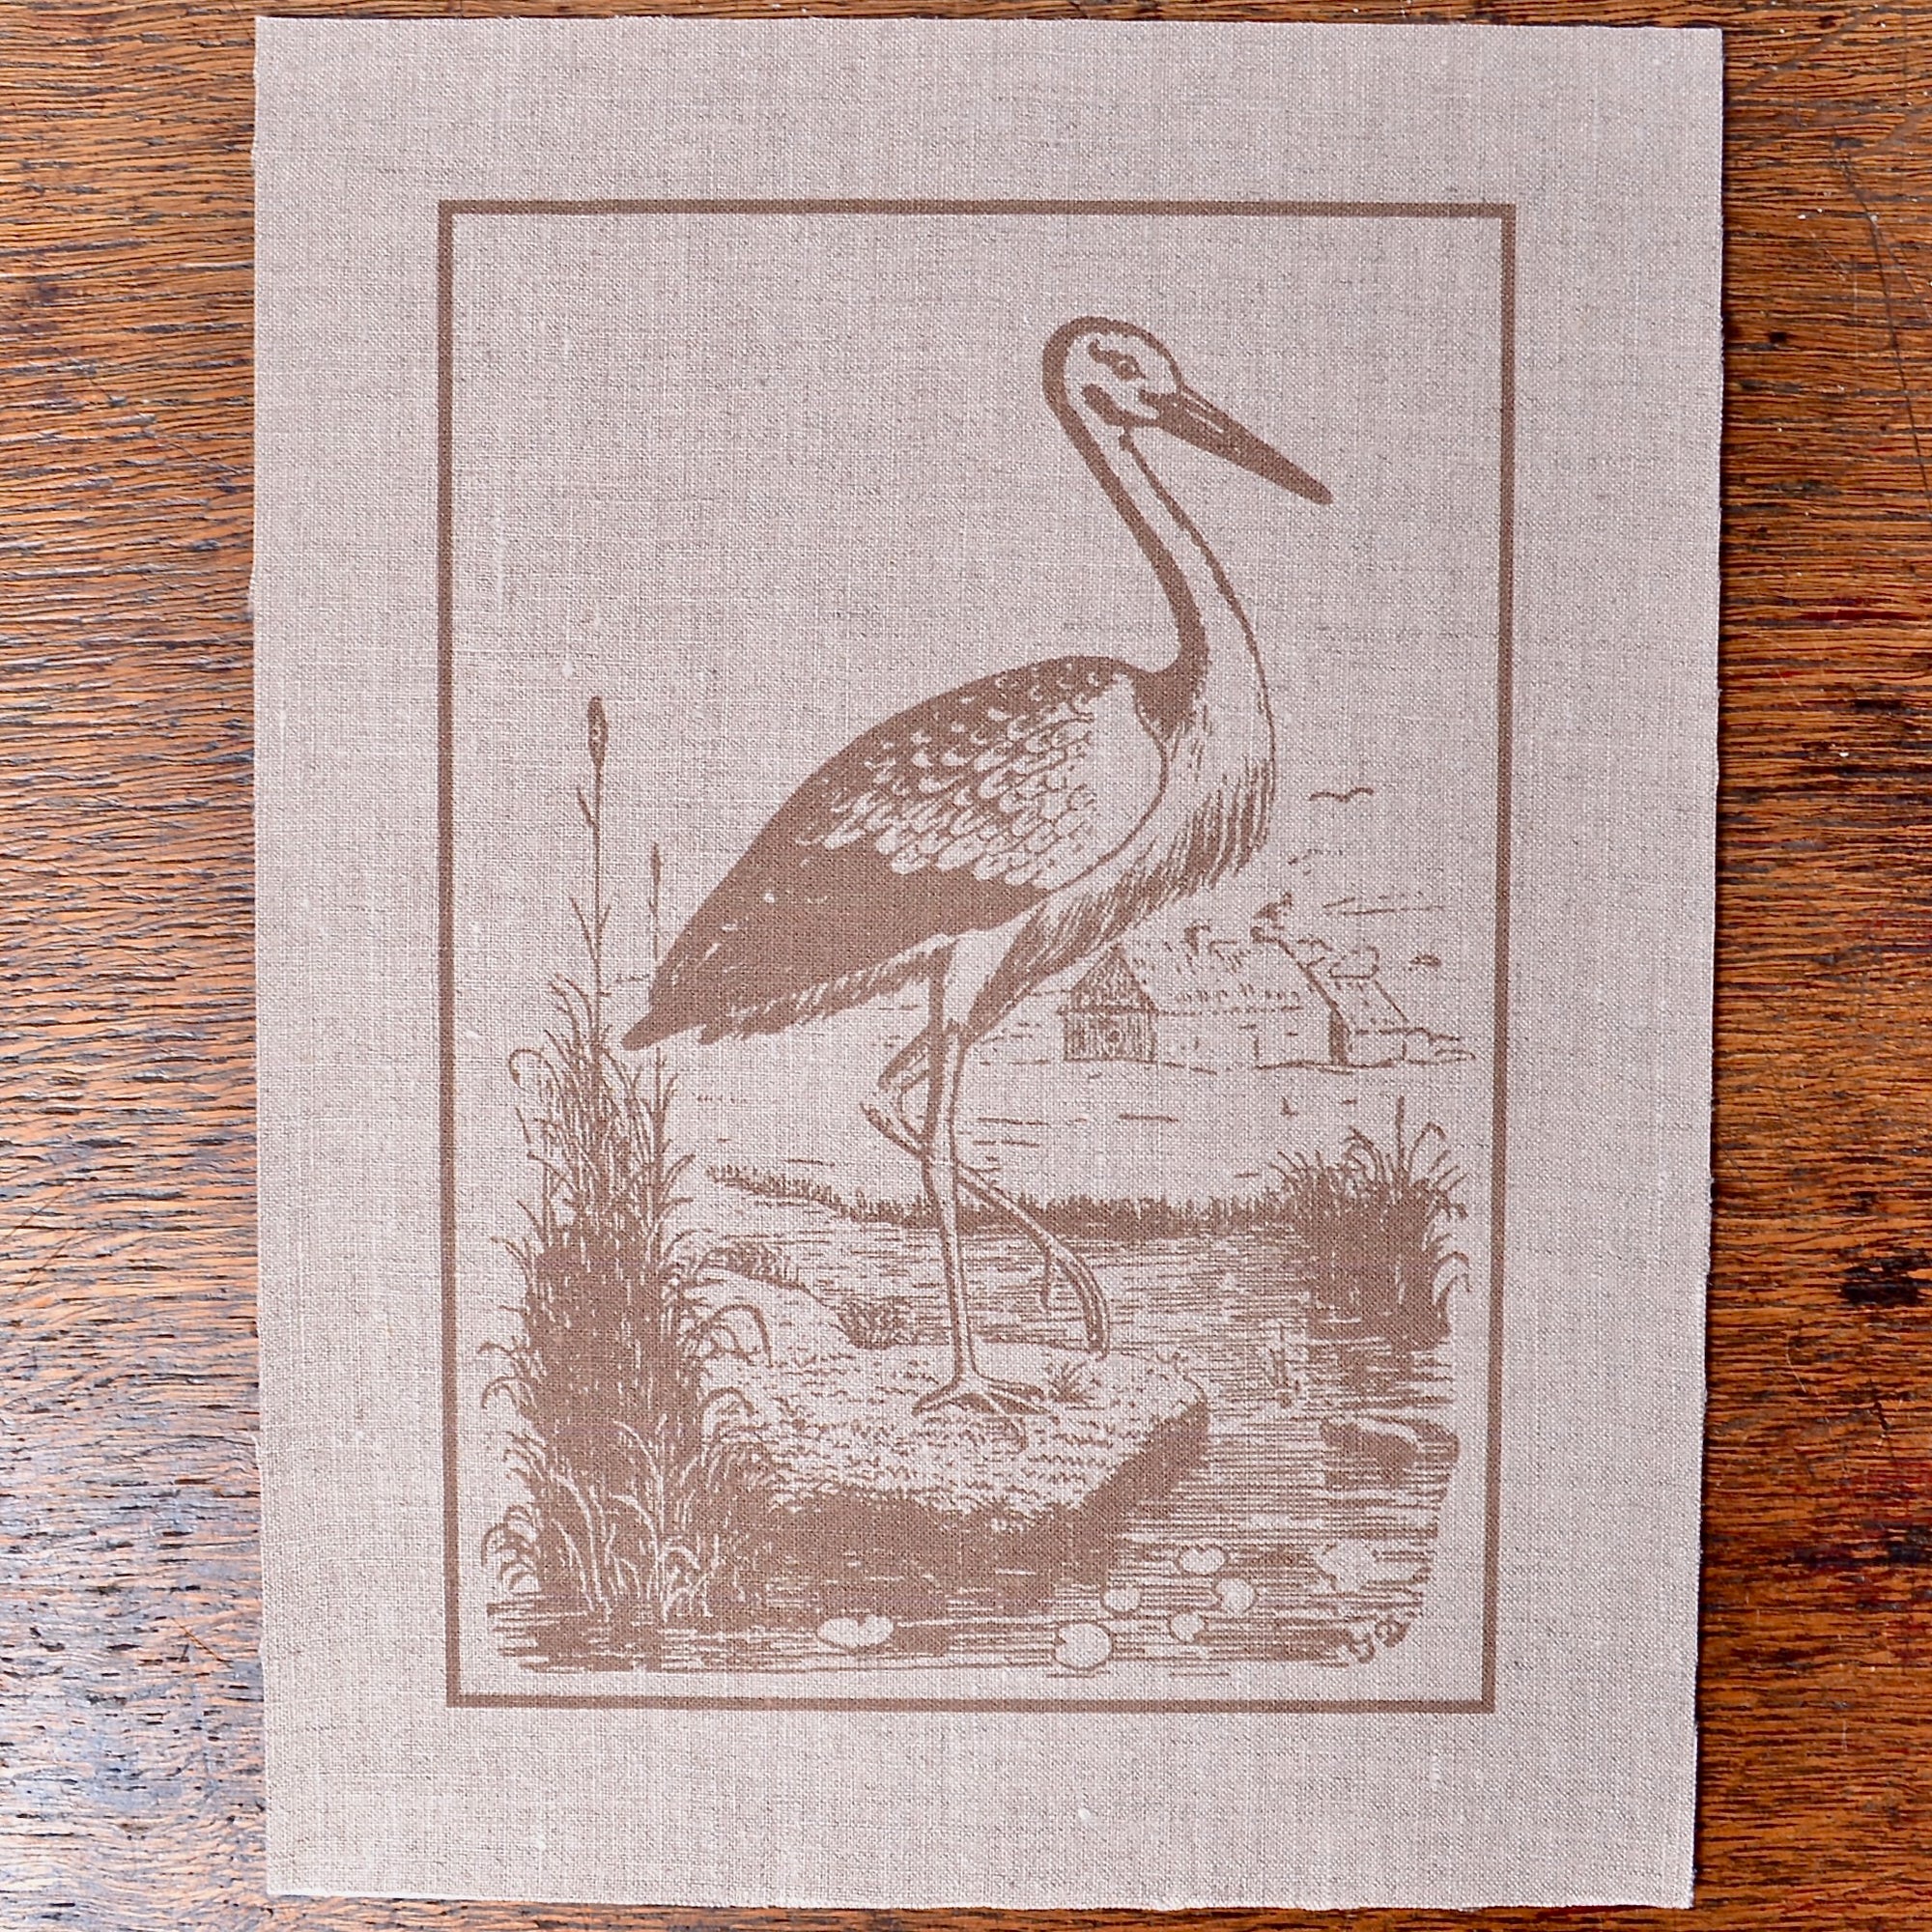 crane image printed on linen fabric